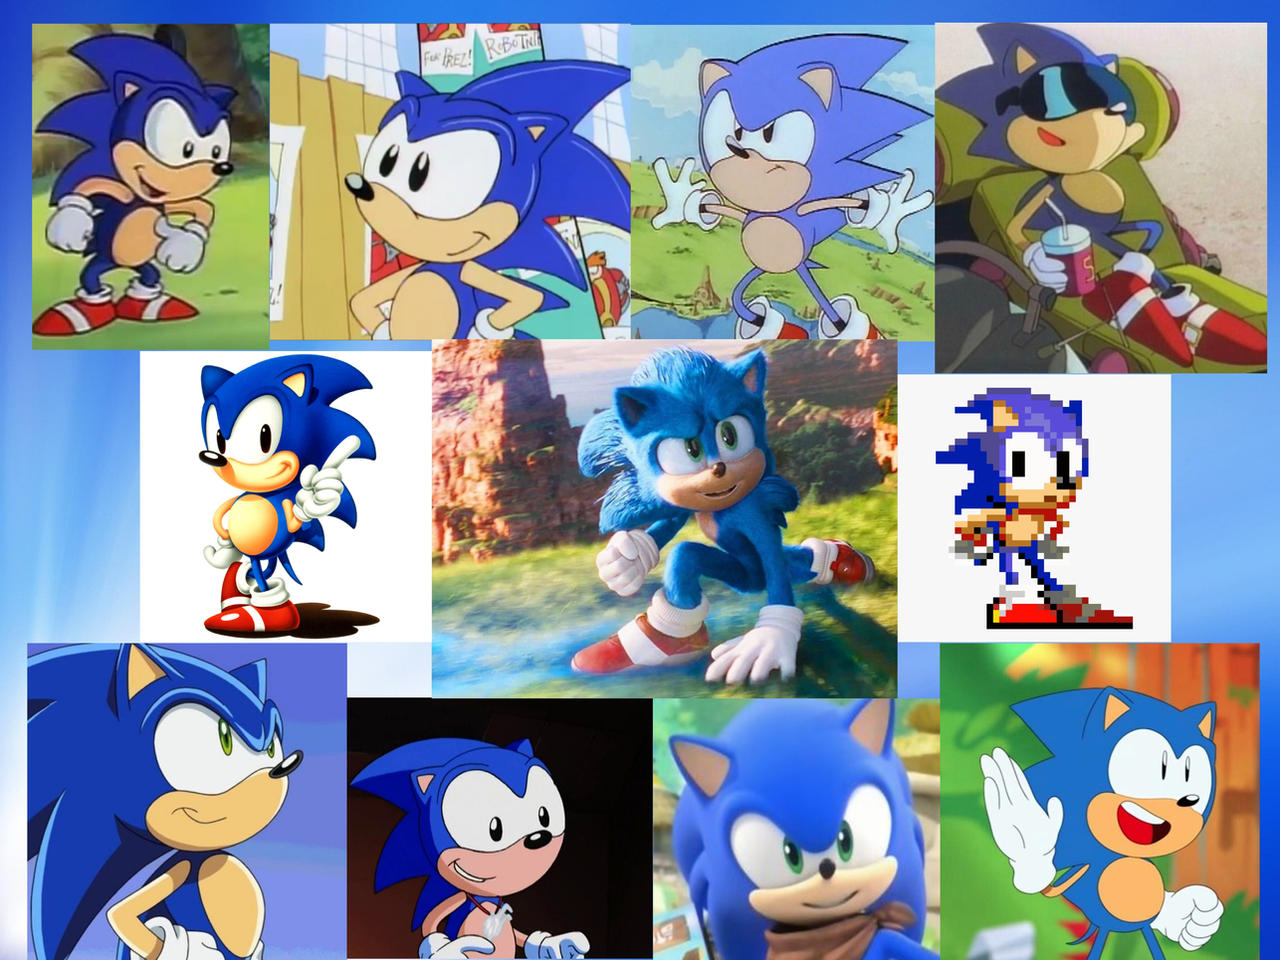 Sonic evolution, Sonic the Hedgehog